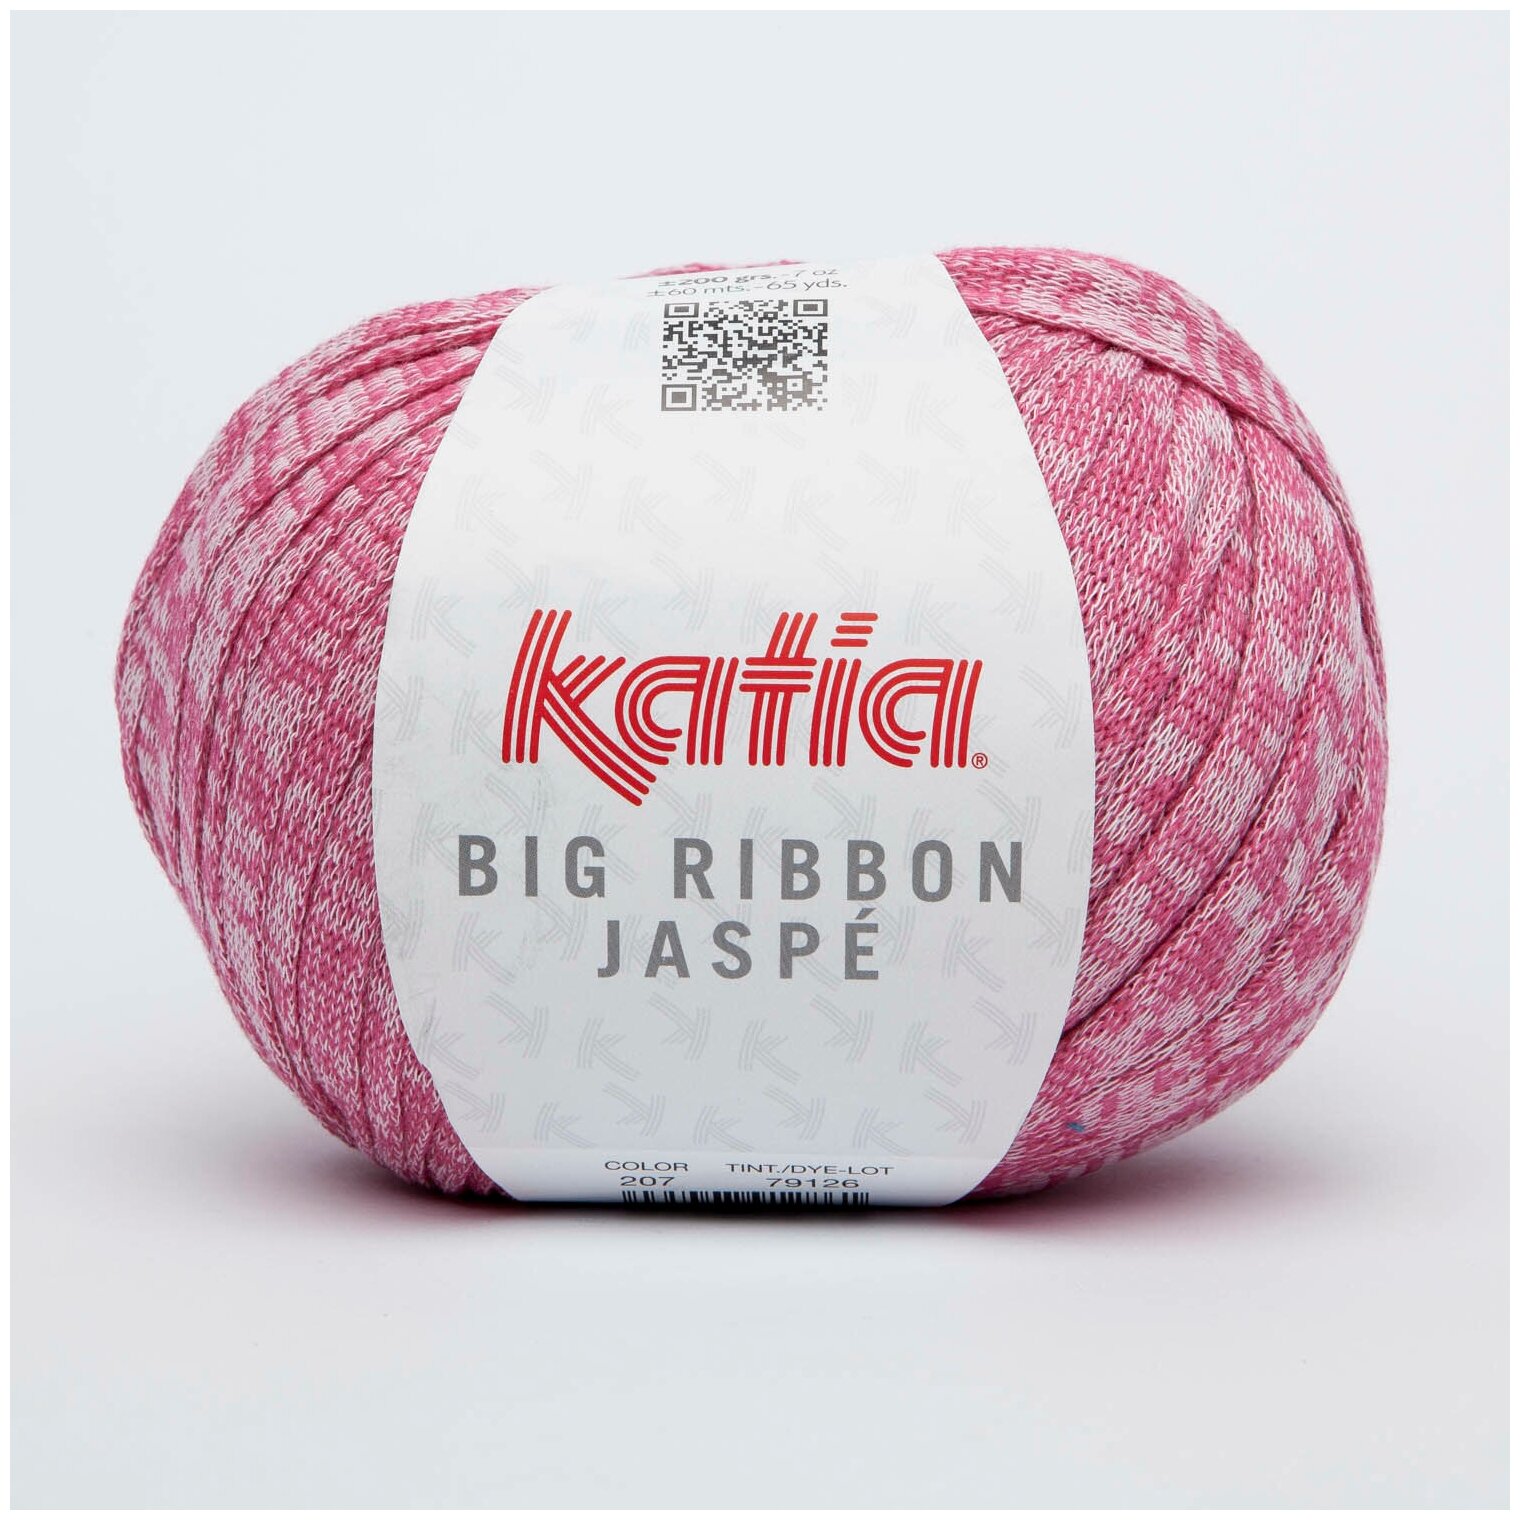 Пряжа Big Ribbon Jaspe Katia(Биг Риббон Джаспэ) цвет 207 фуксия-белый 200 гр/60м 45% хлопок55%полиэстер 1 моток